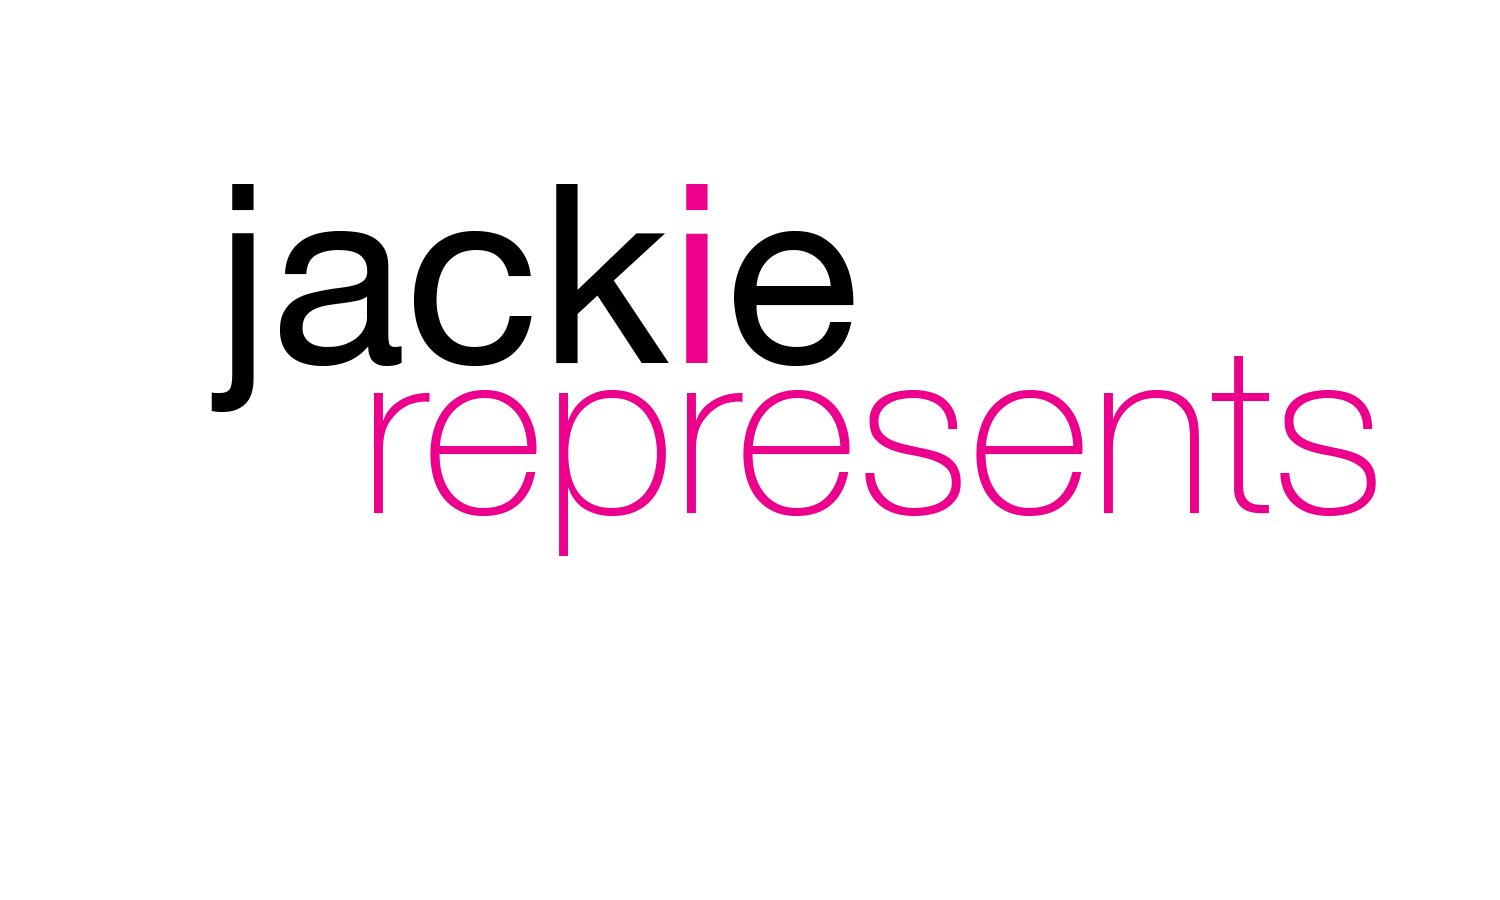 jackie represents